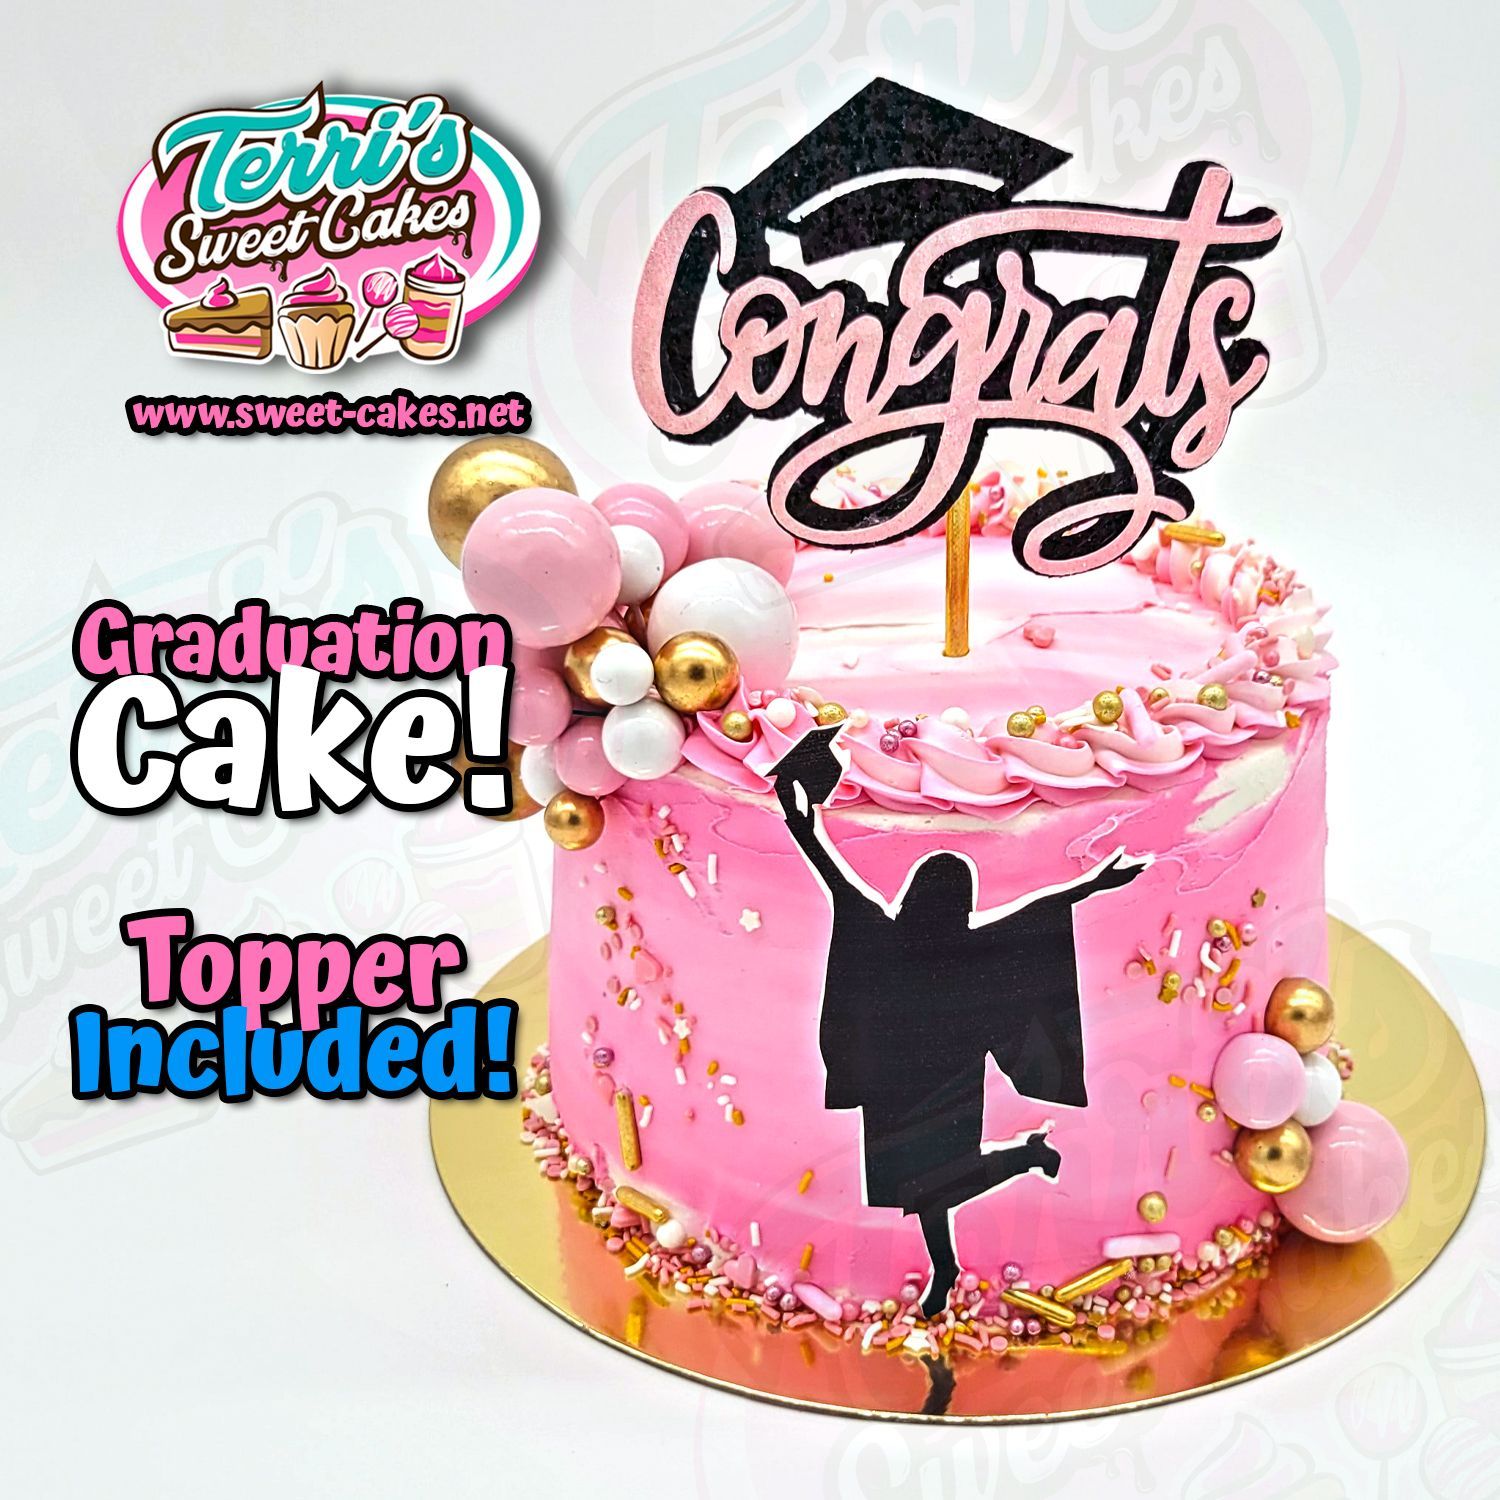 Graduation Cake by Terri's Sweet Cakes!